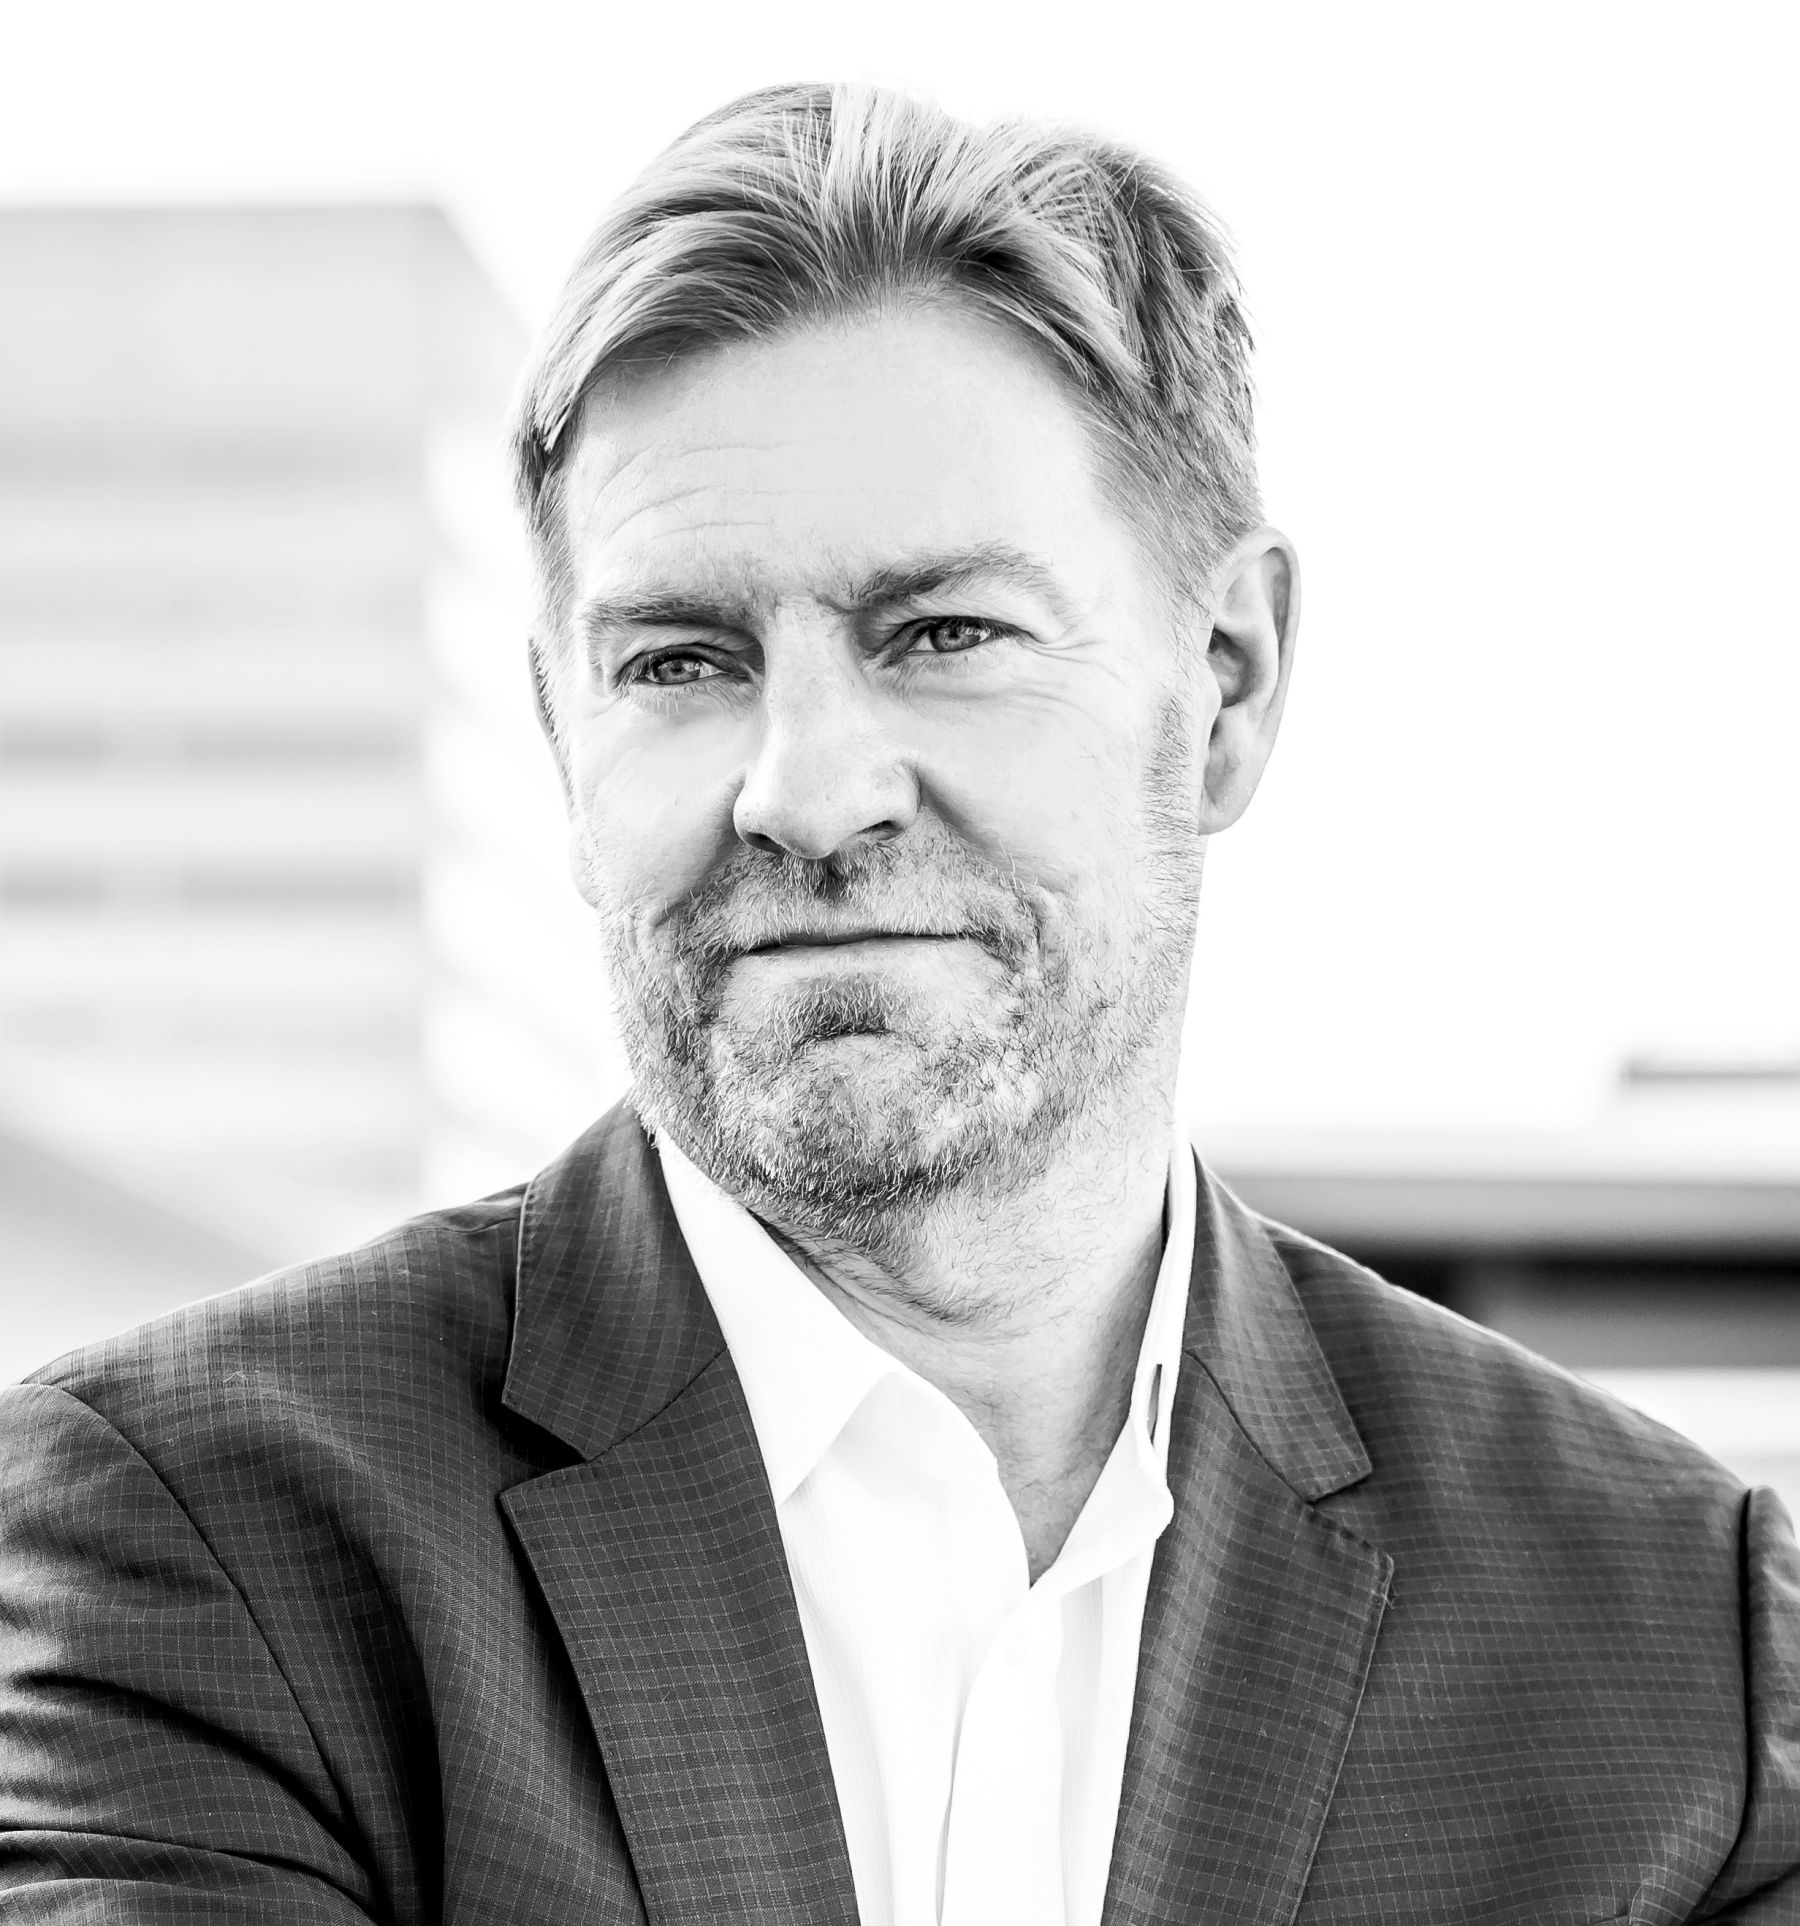 Richard Beaven, CFA, is Lead Portfolio Manager and Principal at Signia Capital Management based in Spokane, Washington